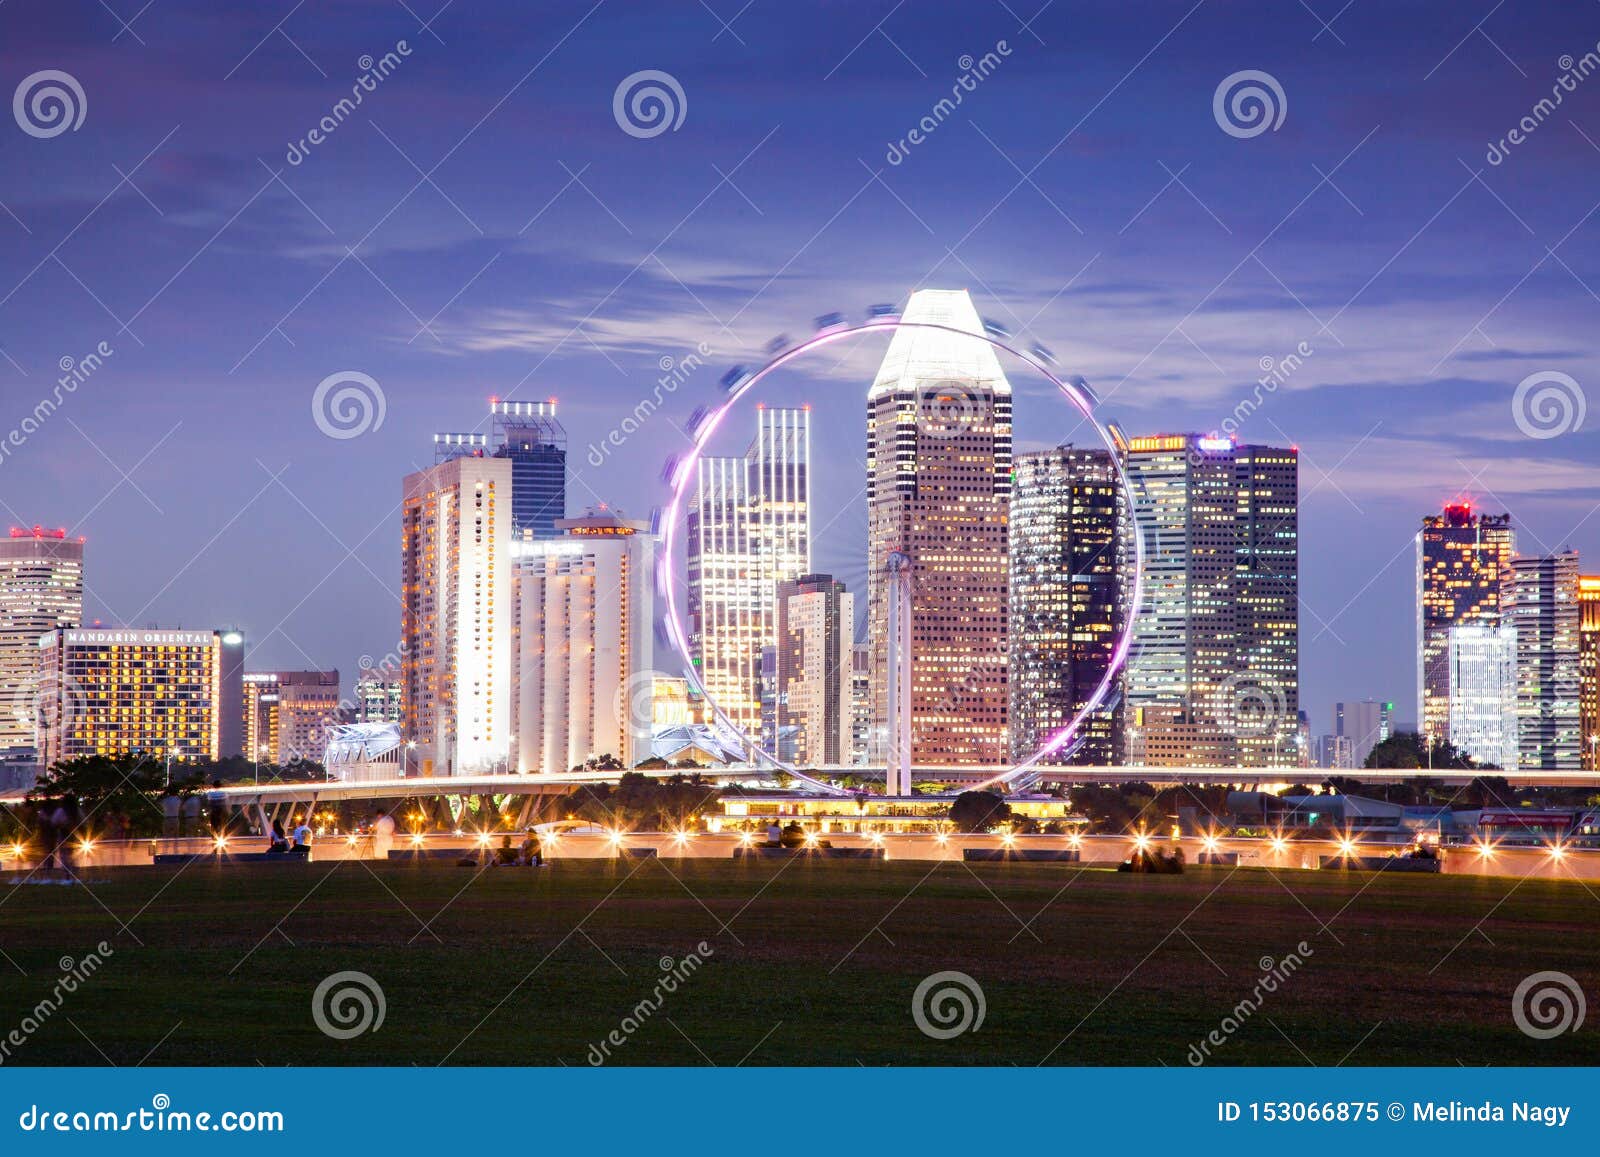 Singapore Singapore March 2019 Vibrant Singapore Skyline With